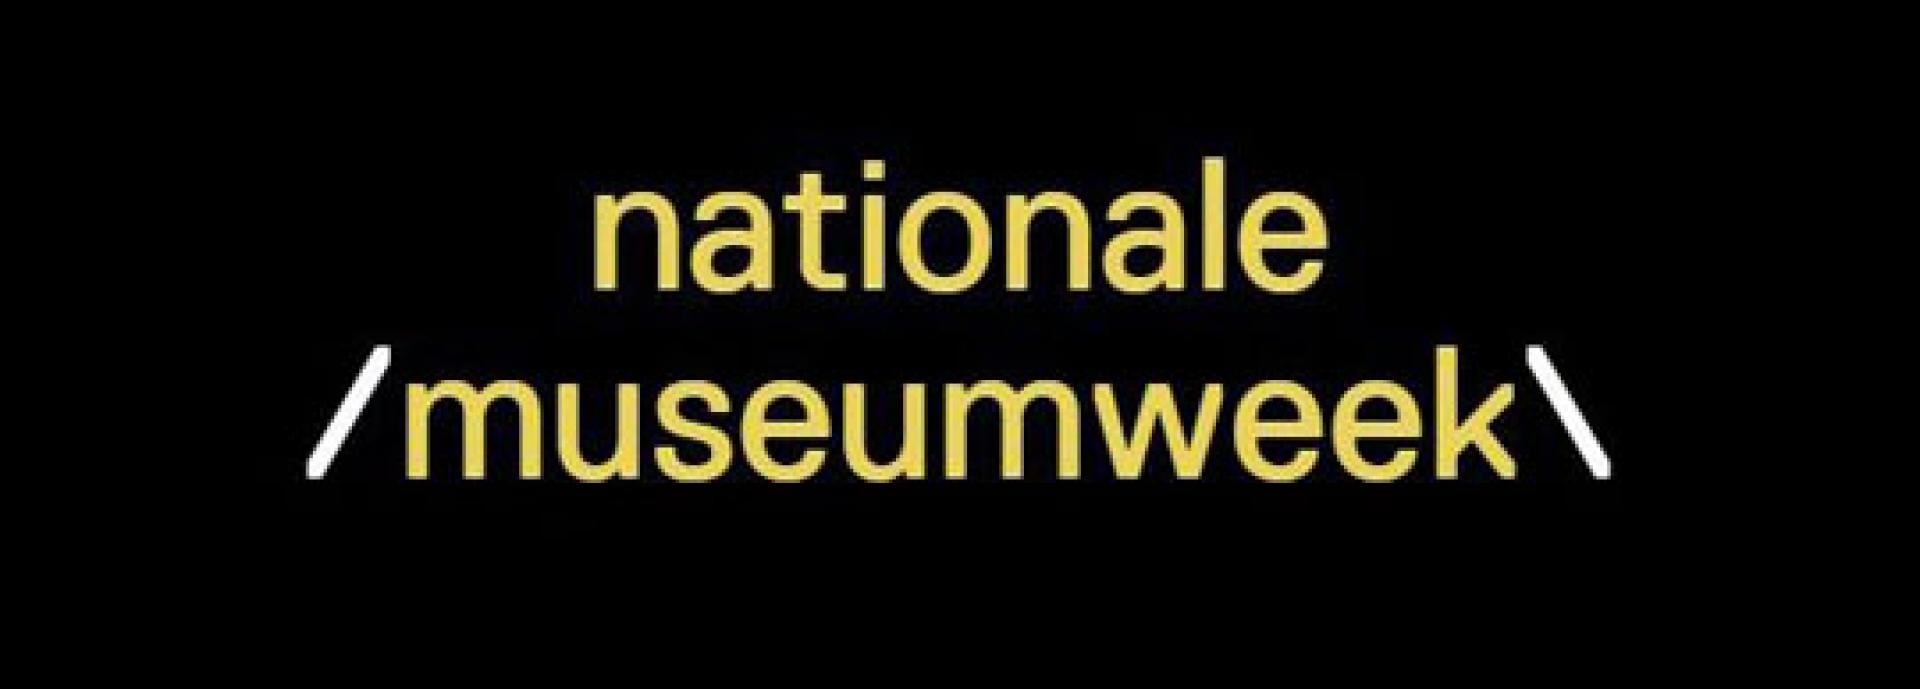 Nationale museumweek